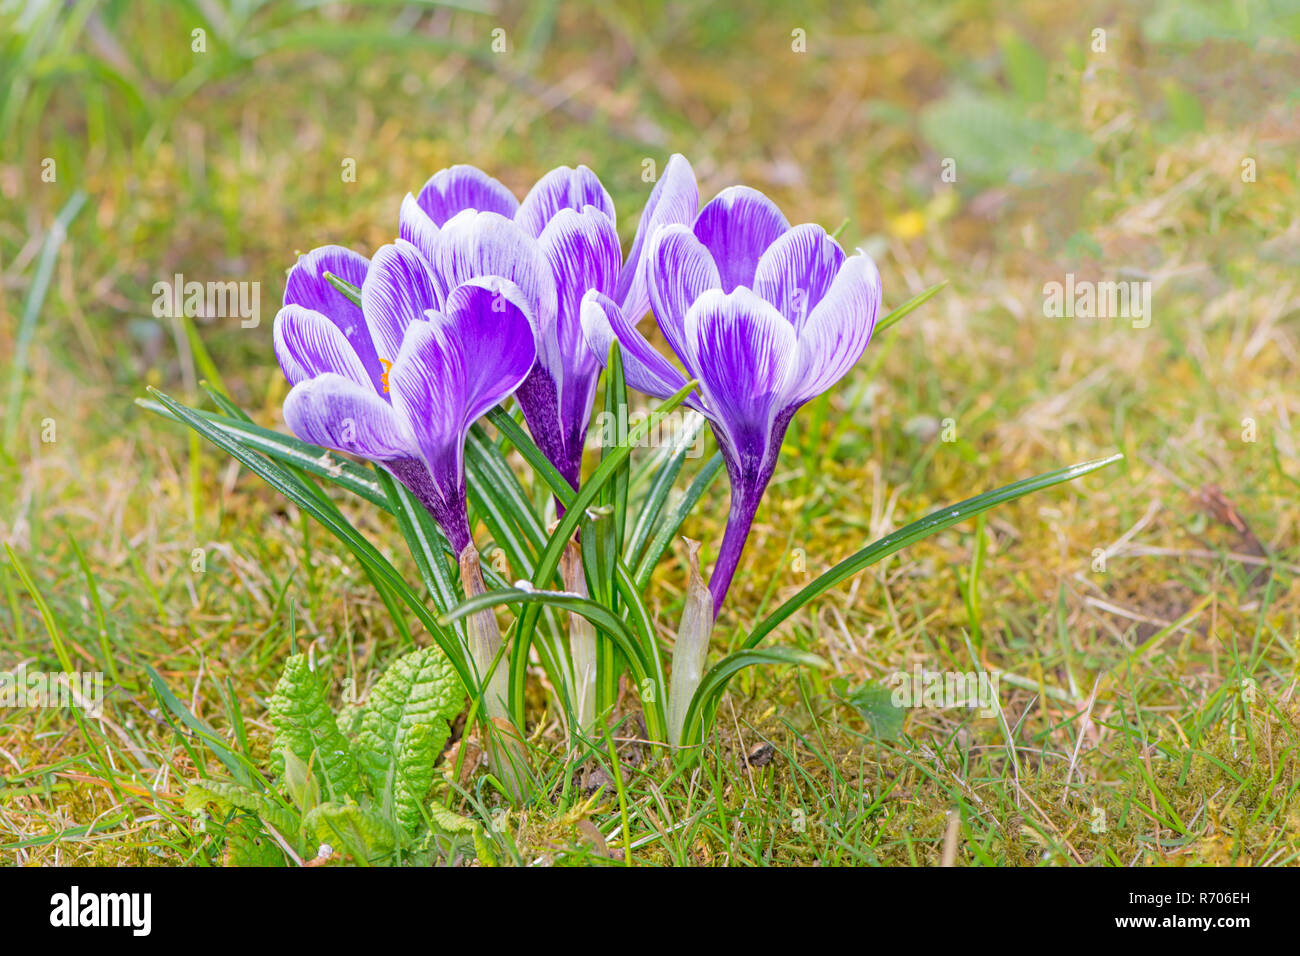 Lila krokusse Blumen im Gras Stockfoto